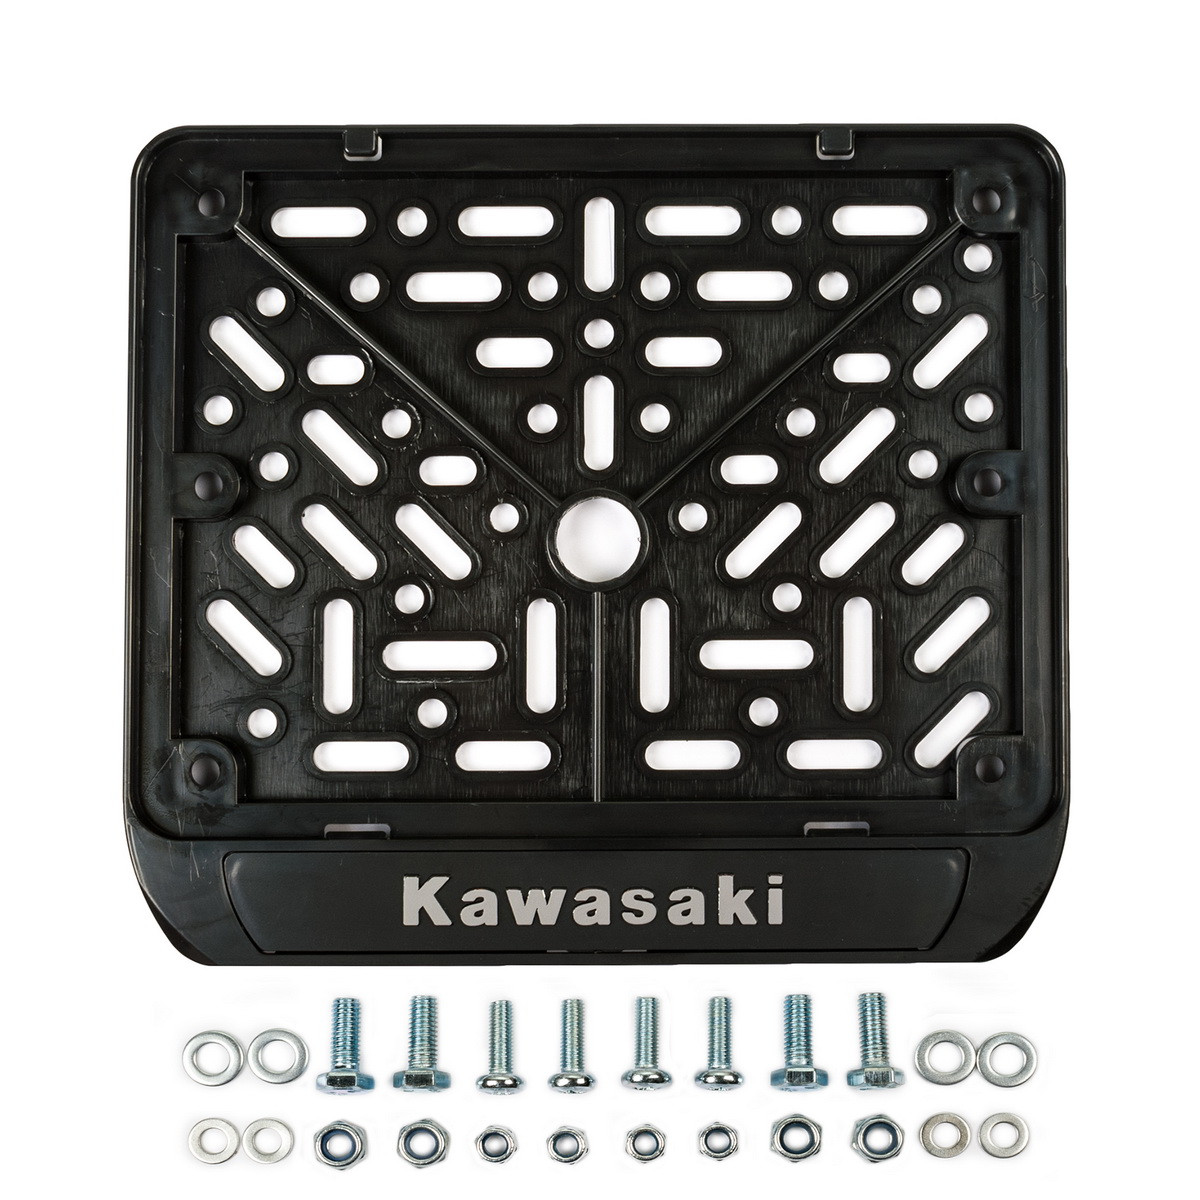 GENERIC KAWASAKI01 рамка для номера мотоцикла нового образца KAWASAKI